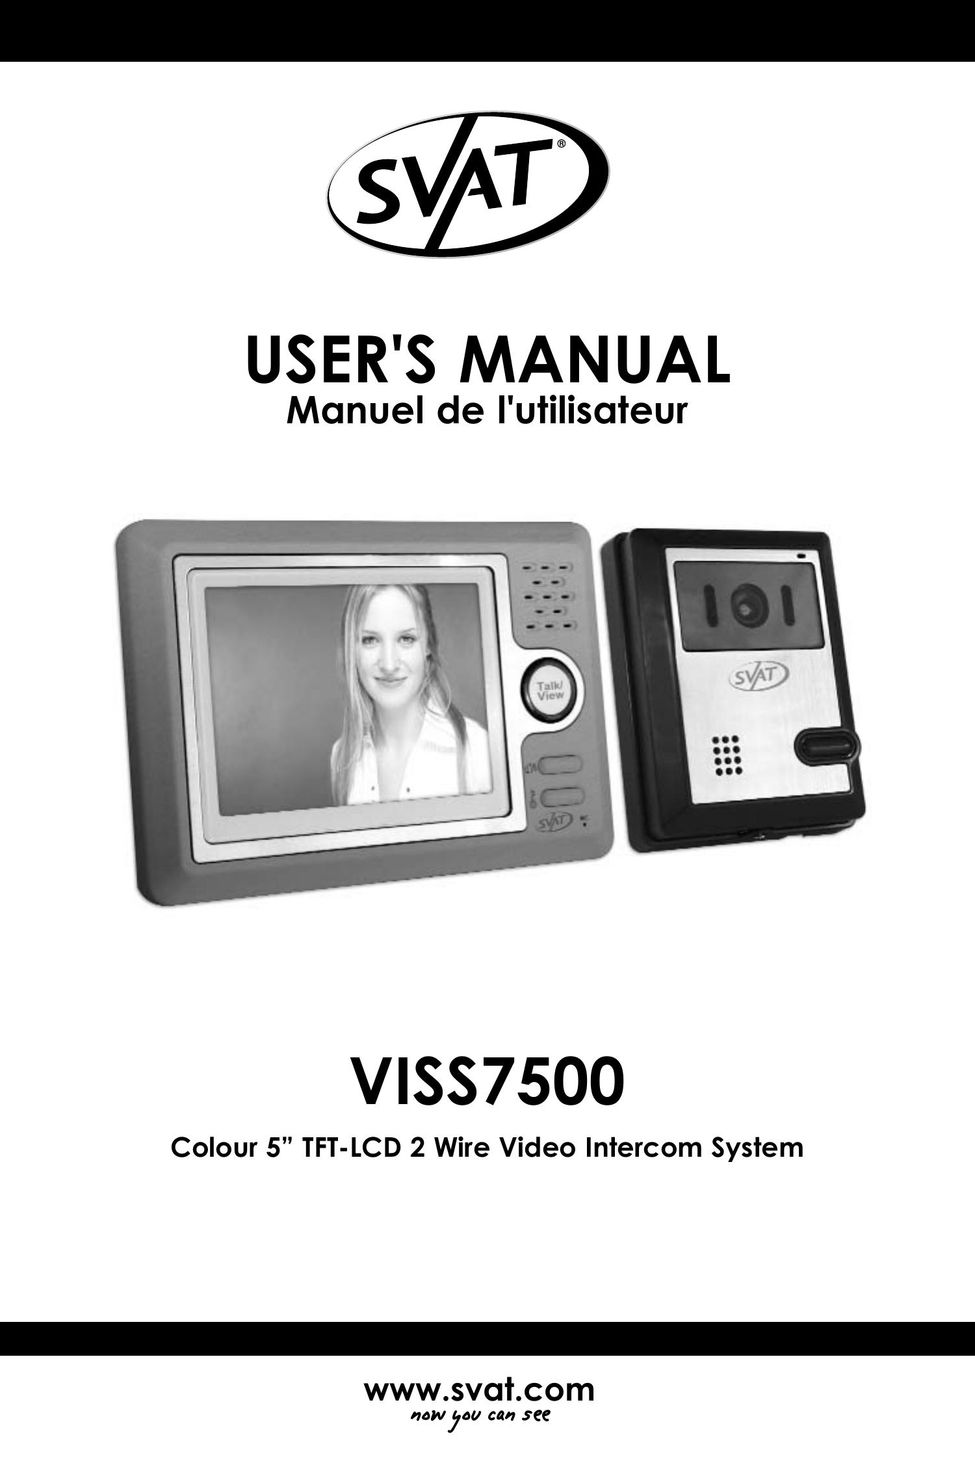 SVAT Electronics VISS7500 Home Security System User Manual